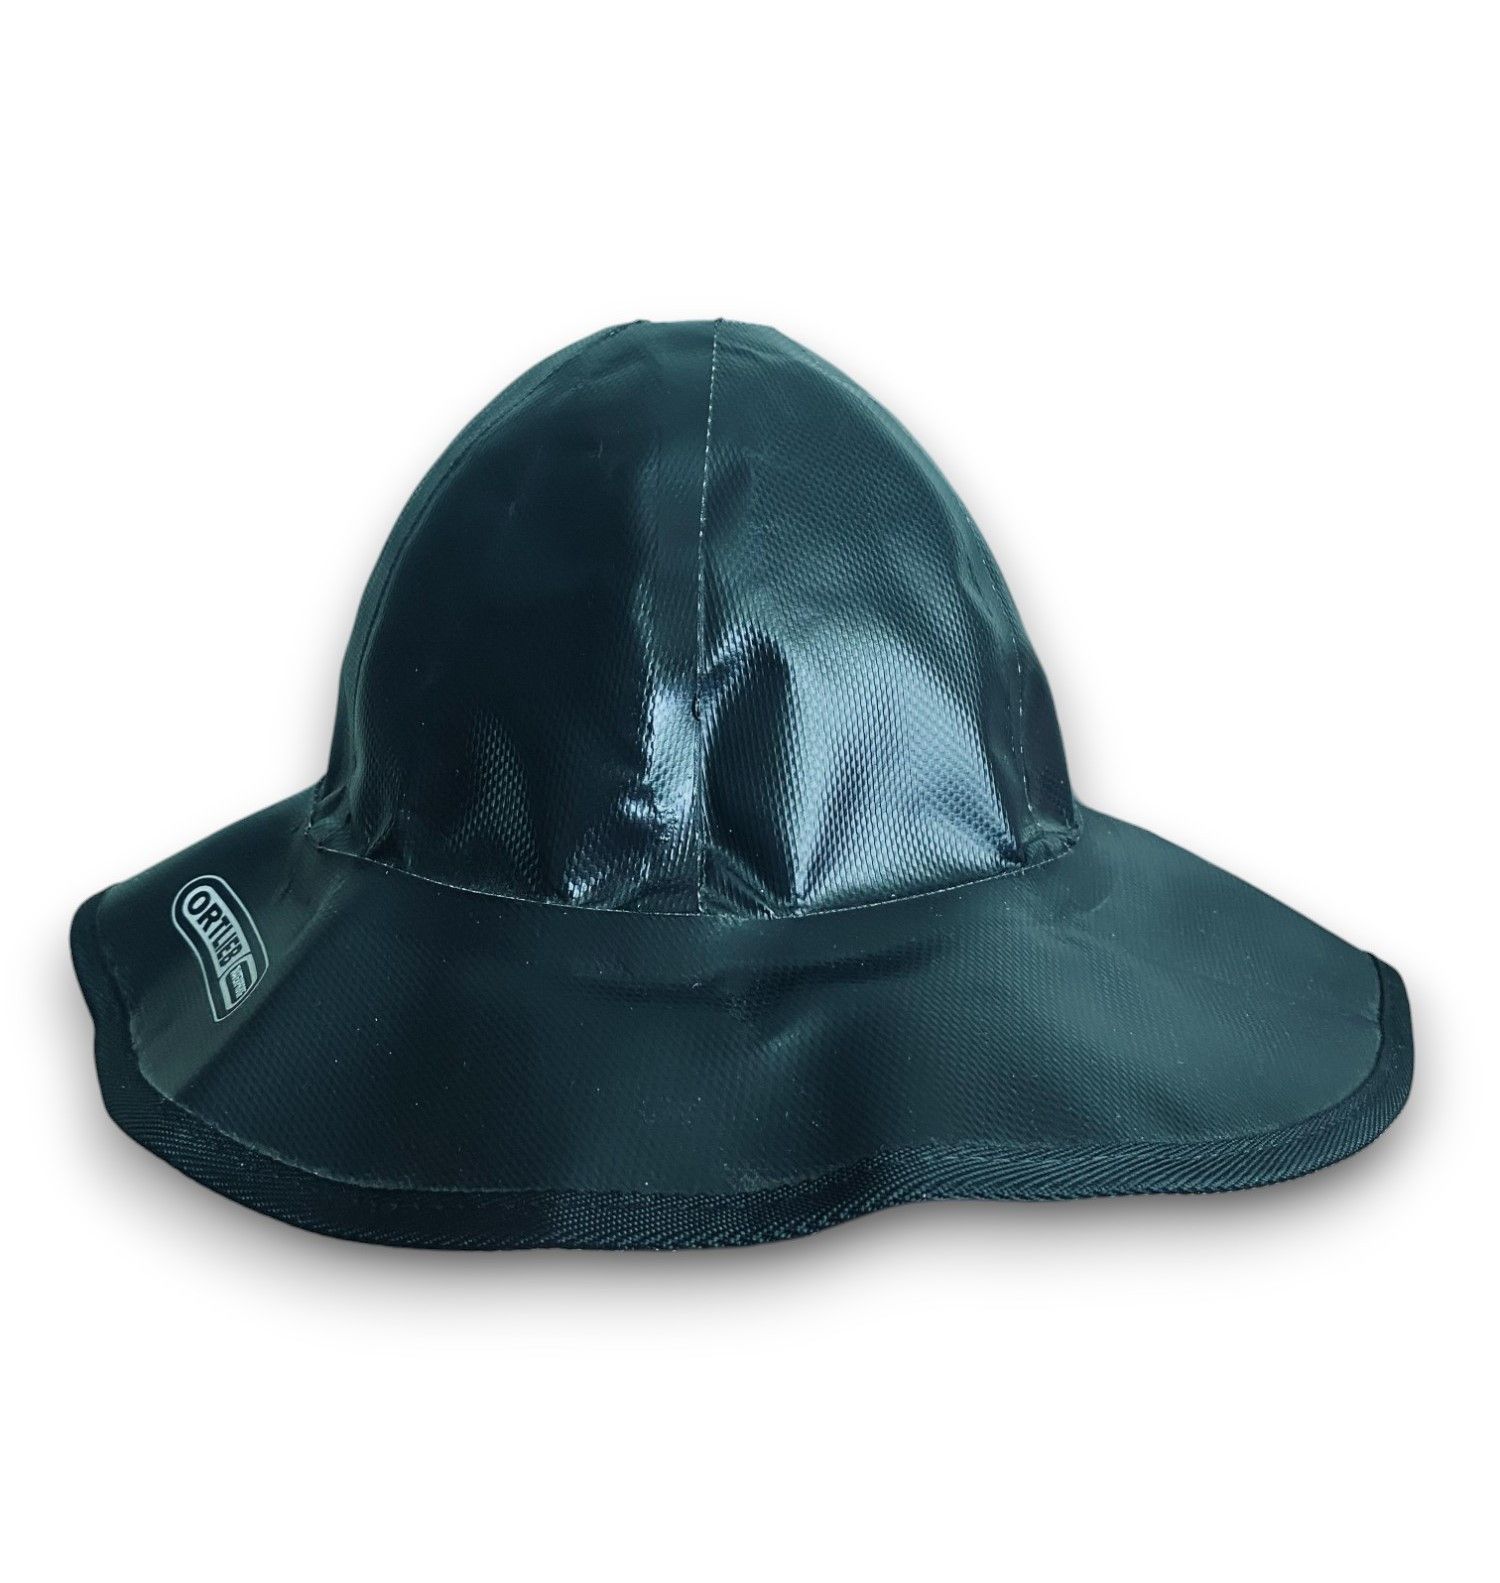 Outdoor Life - Ortlieb Boonie Hat Waterproof Rare Black Gorcope Goretex - 4